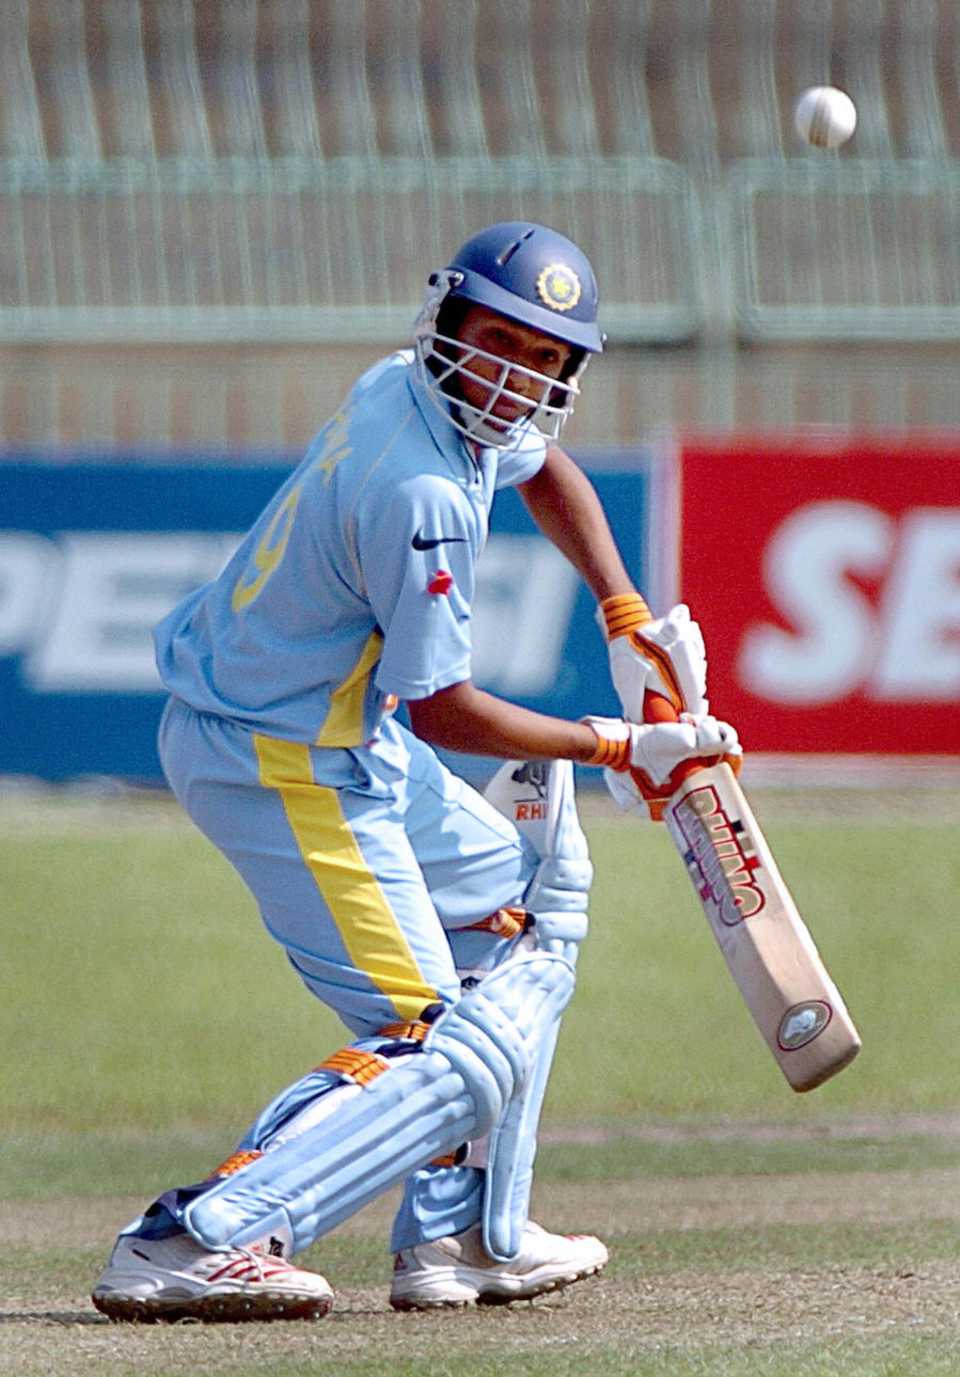 Rohit Sharma hits out, semi-final, India vs England, ICC Under-19 Cricket World Cup, R Premadasa Stadium, Colombo, February 15, 2006